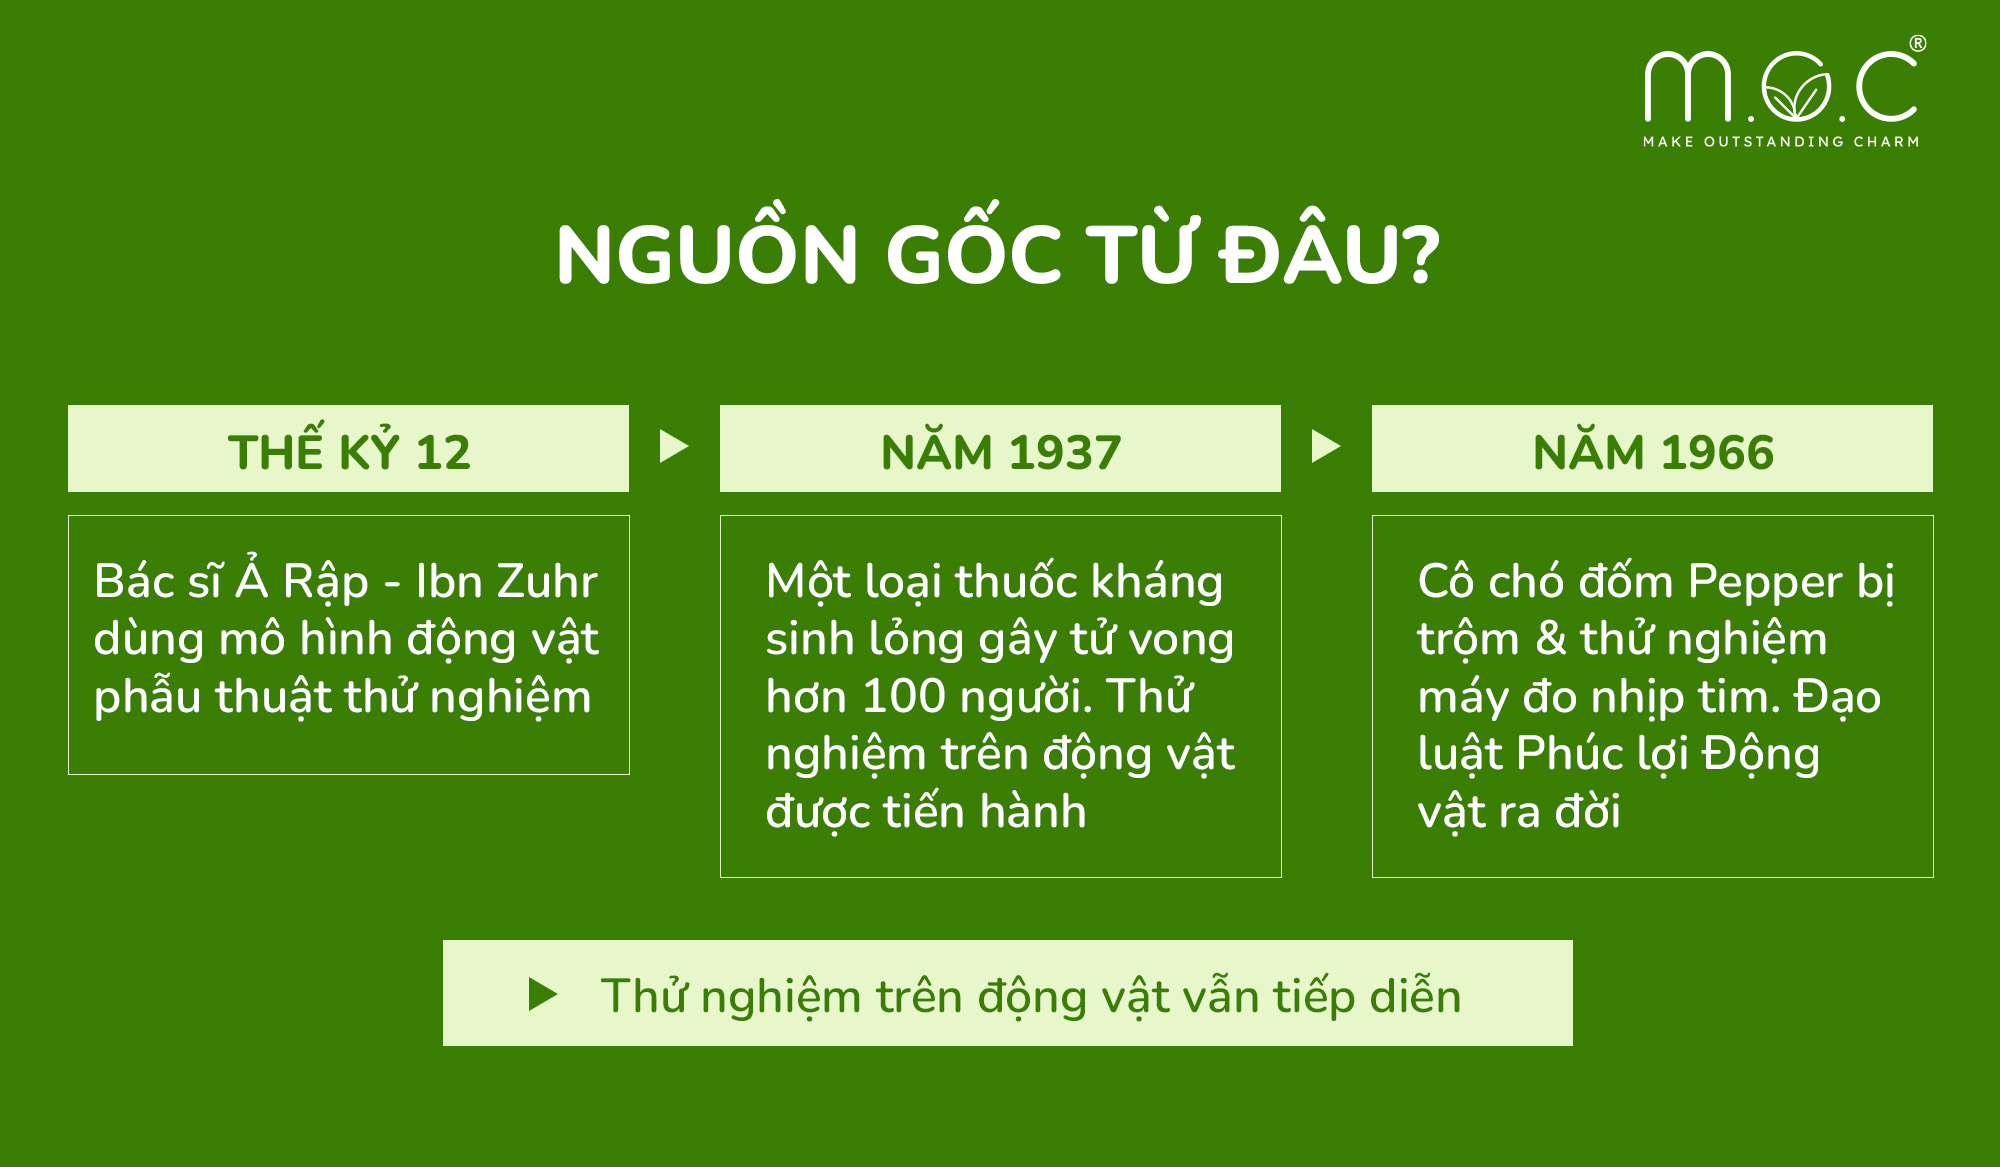 nguon-goc-thu-nghiem-tren-dong-vat